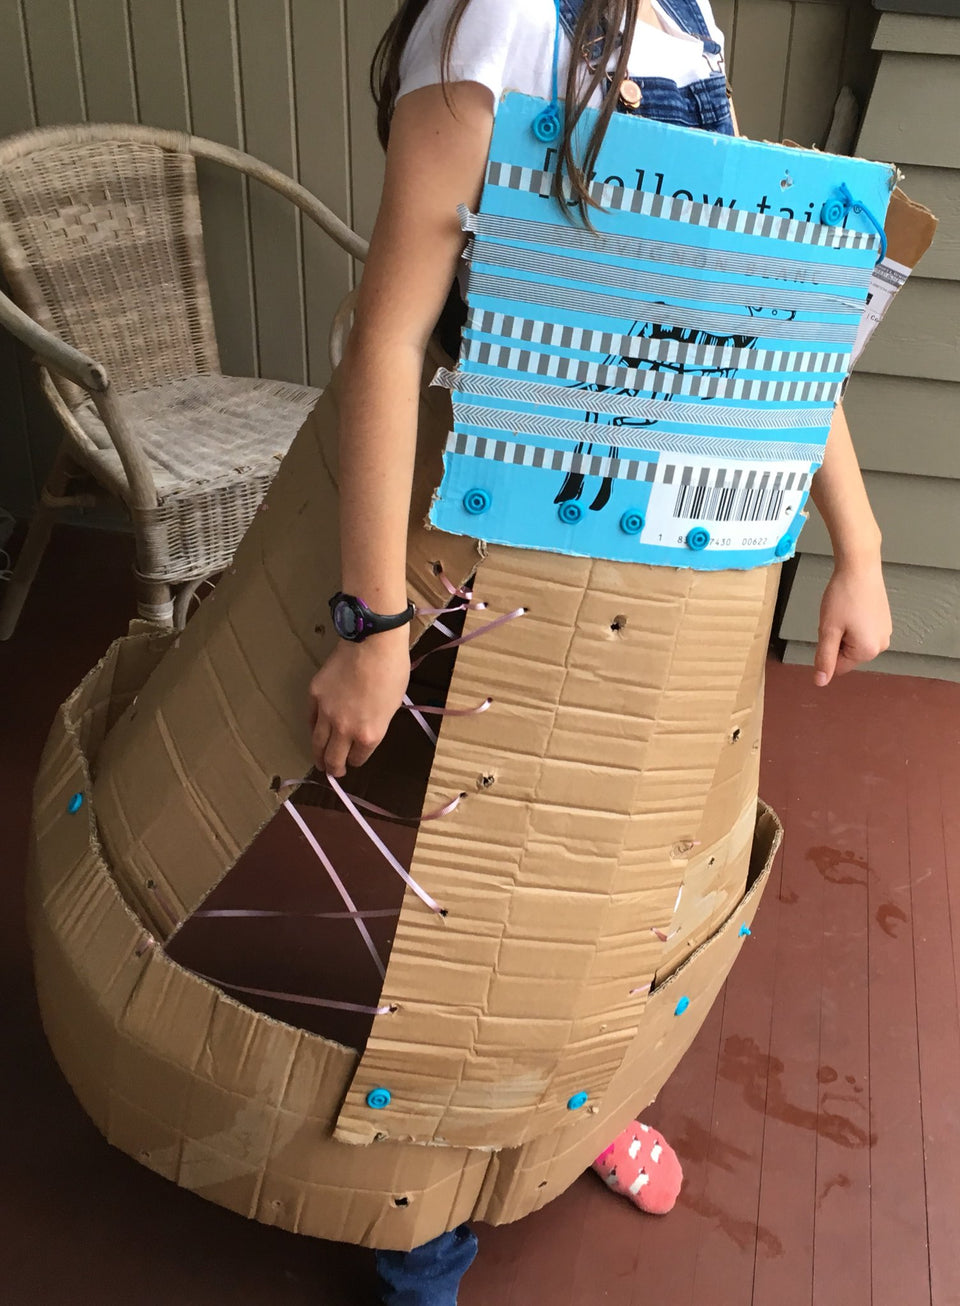 Cardboard dress skirt made with Makedo cardboard construction system